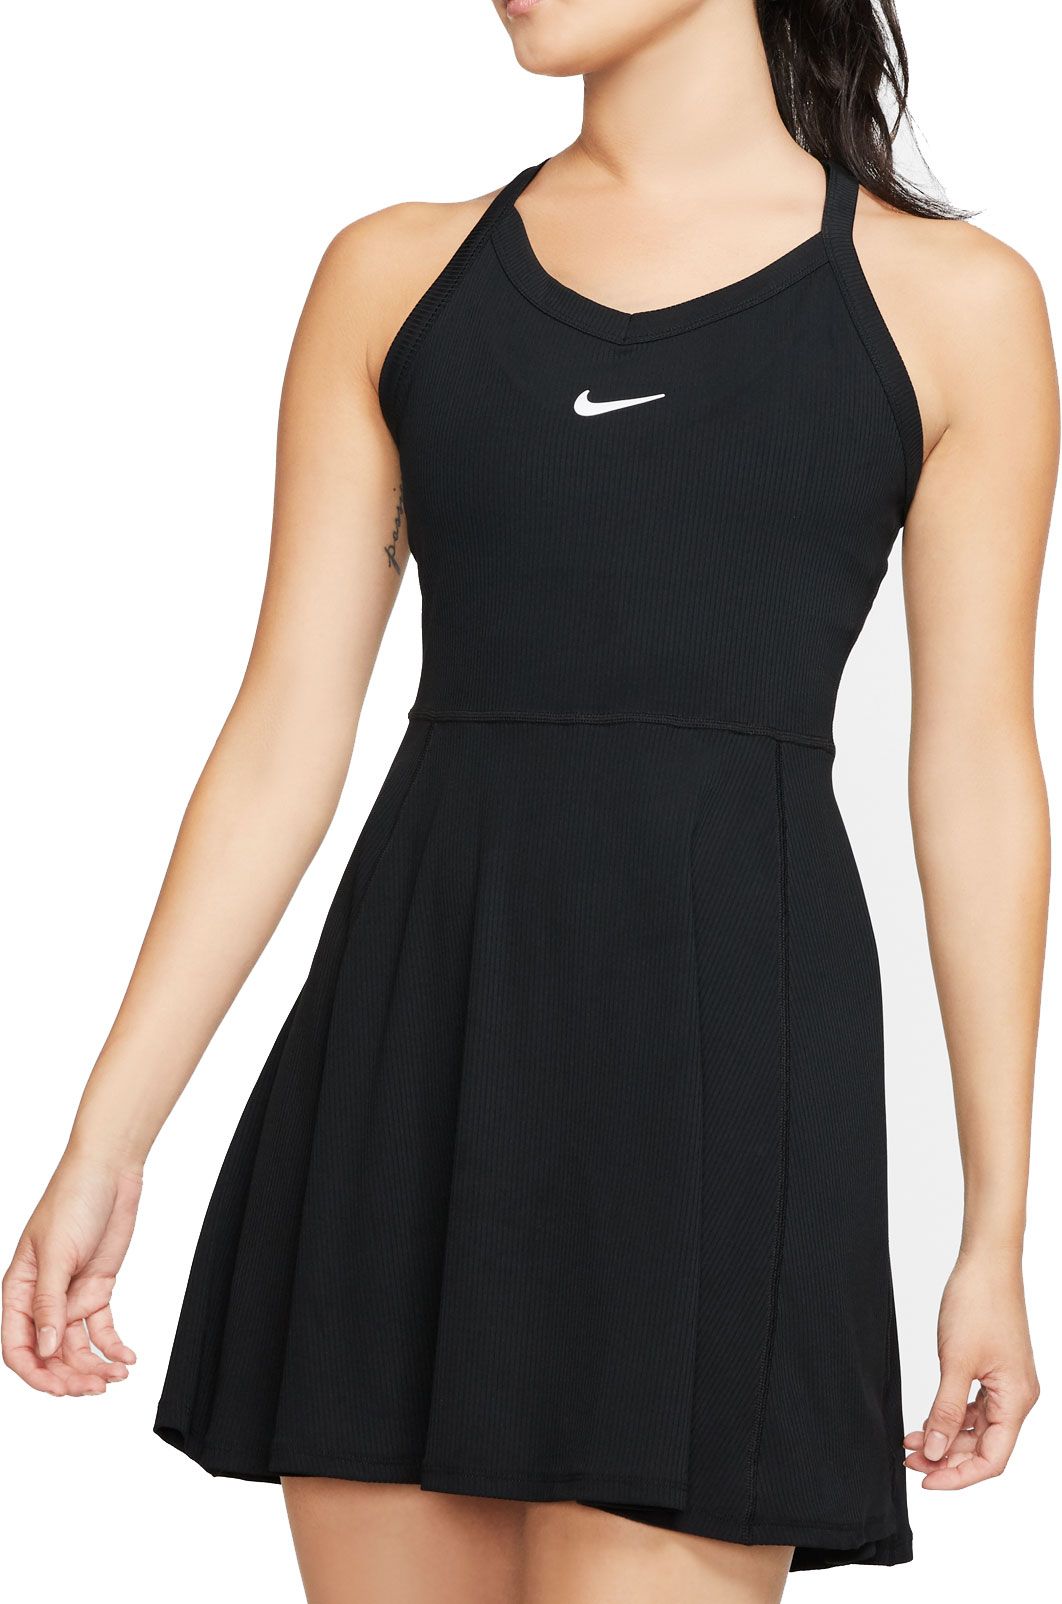 tennis dress black